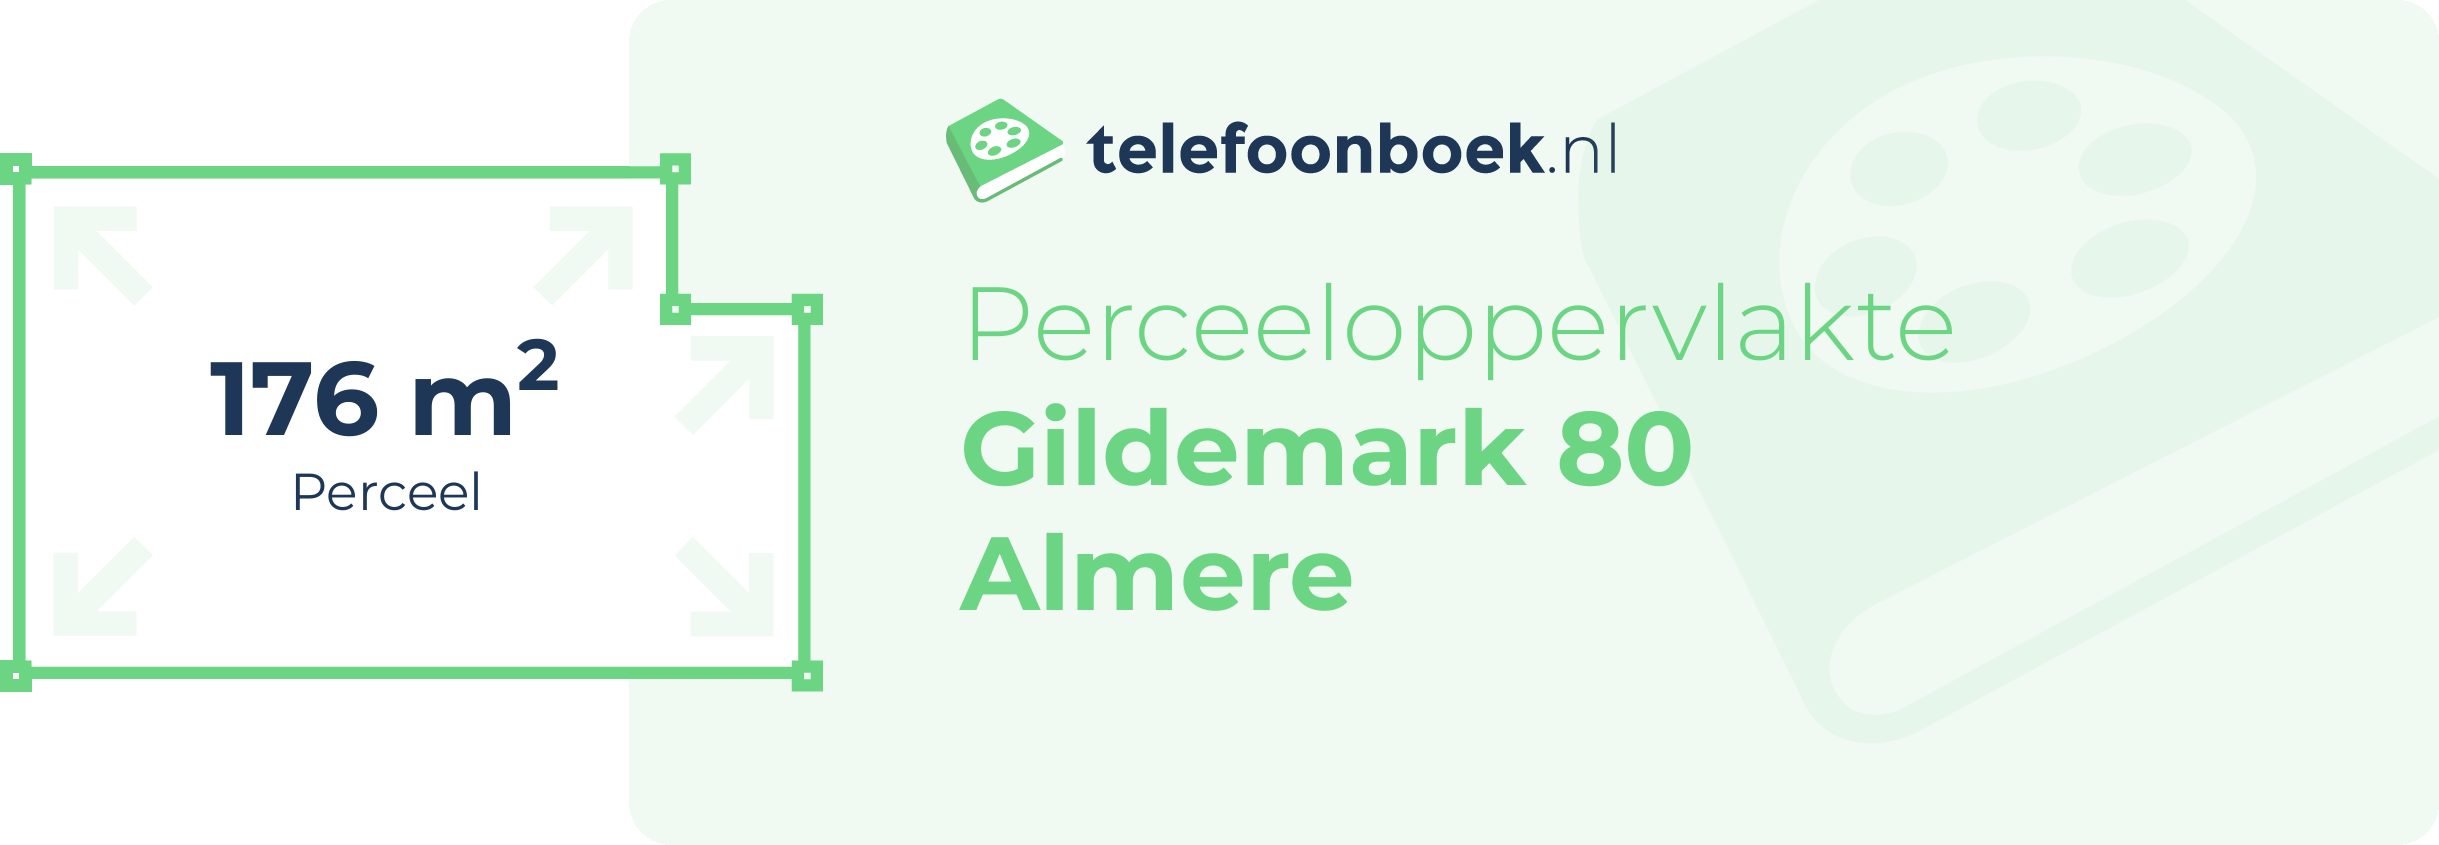 Perceeloppervlakte Gildemark 80 Almere